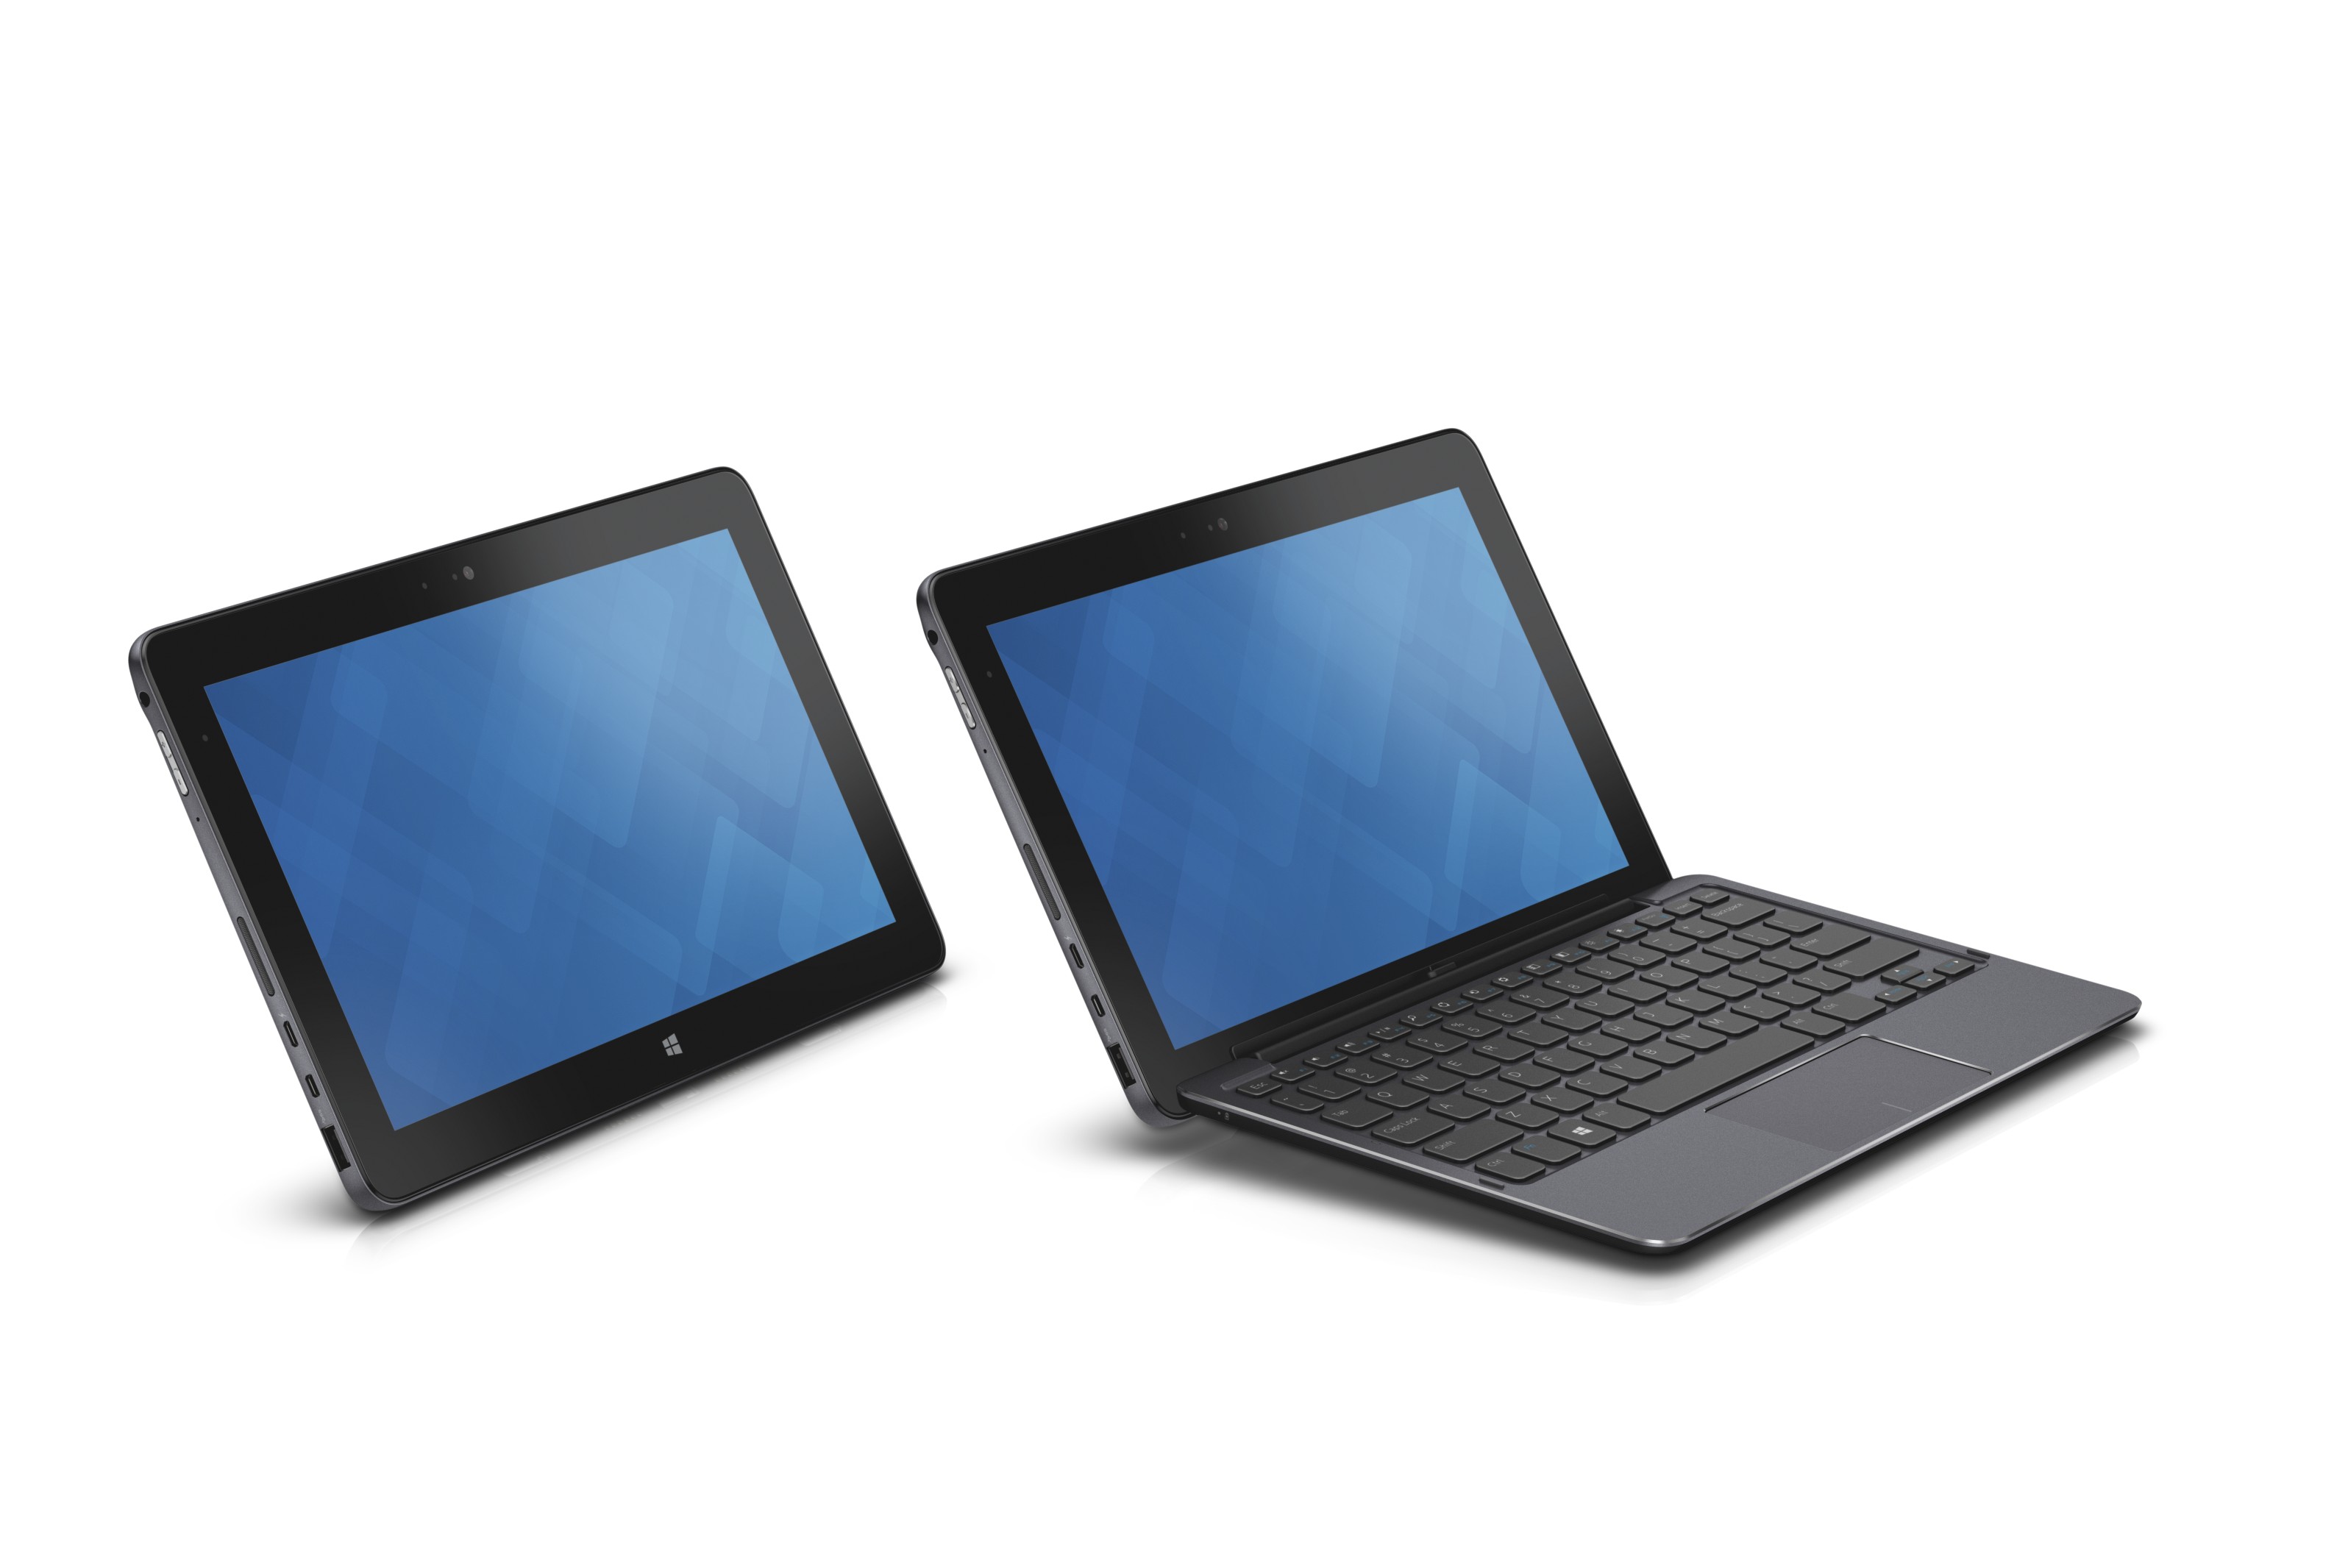 Venue 11 Pro 7000 Series Windows Tablets Upgrade Magazine